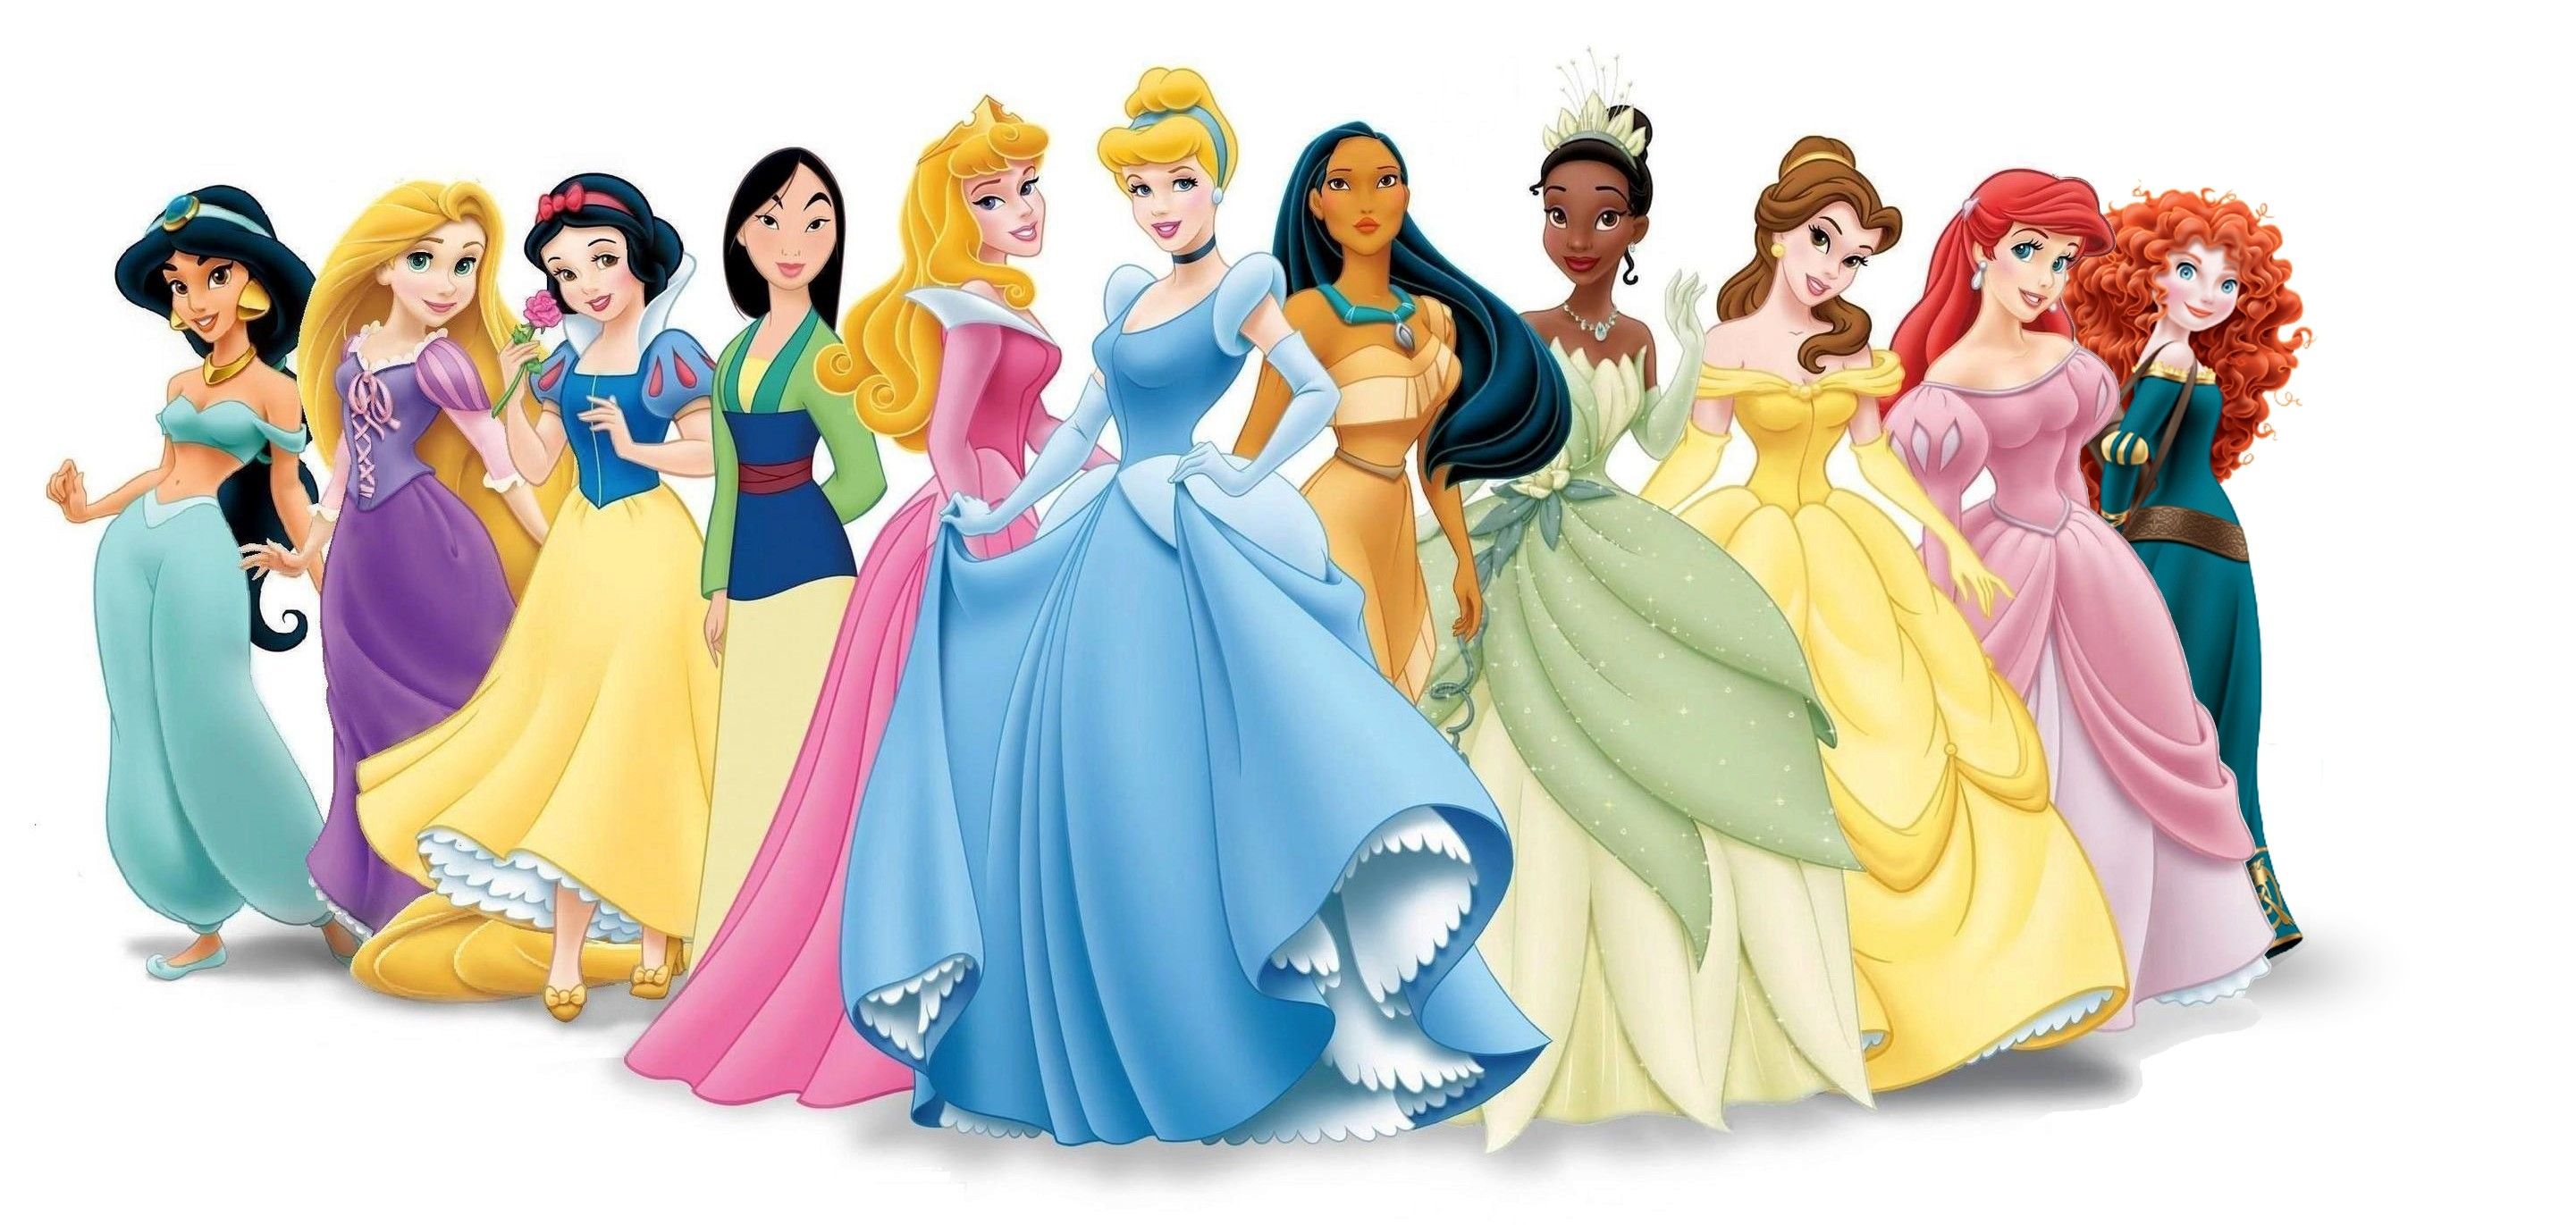 Disney princesses standing in a line - Princess